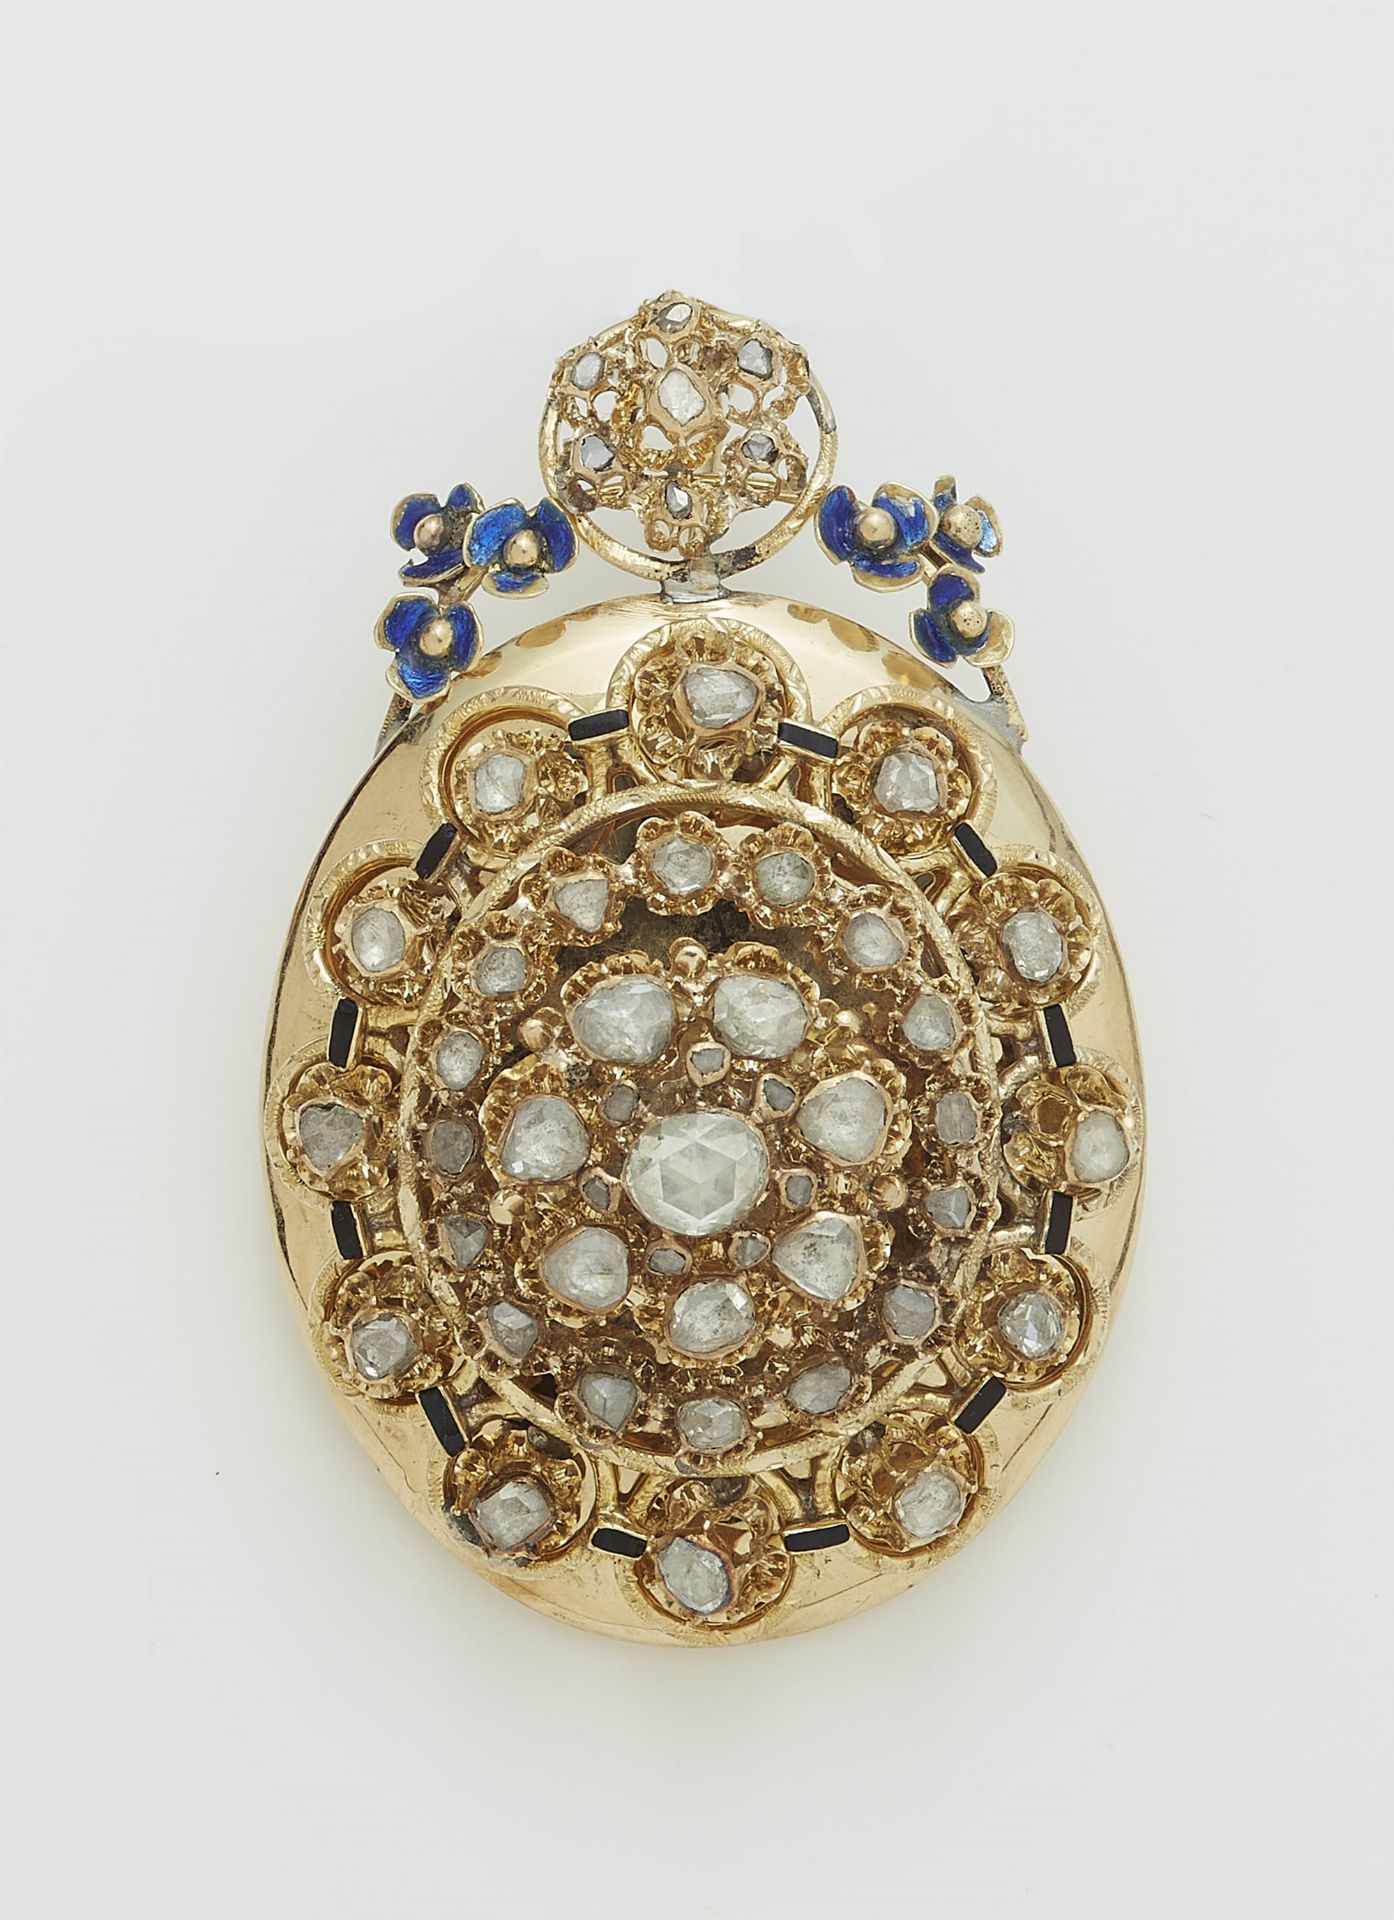 An Italian 14k gold enamel and rose-cut diamond locket.